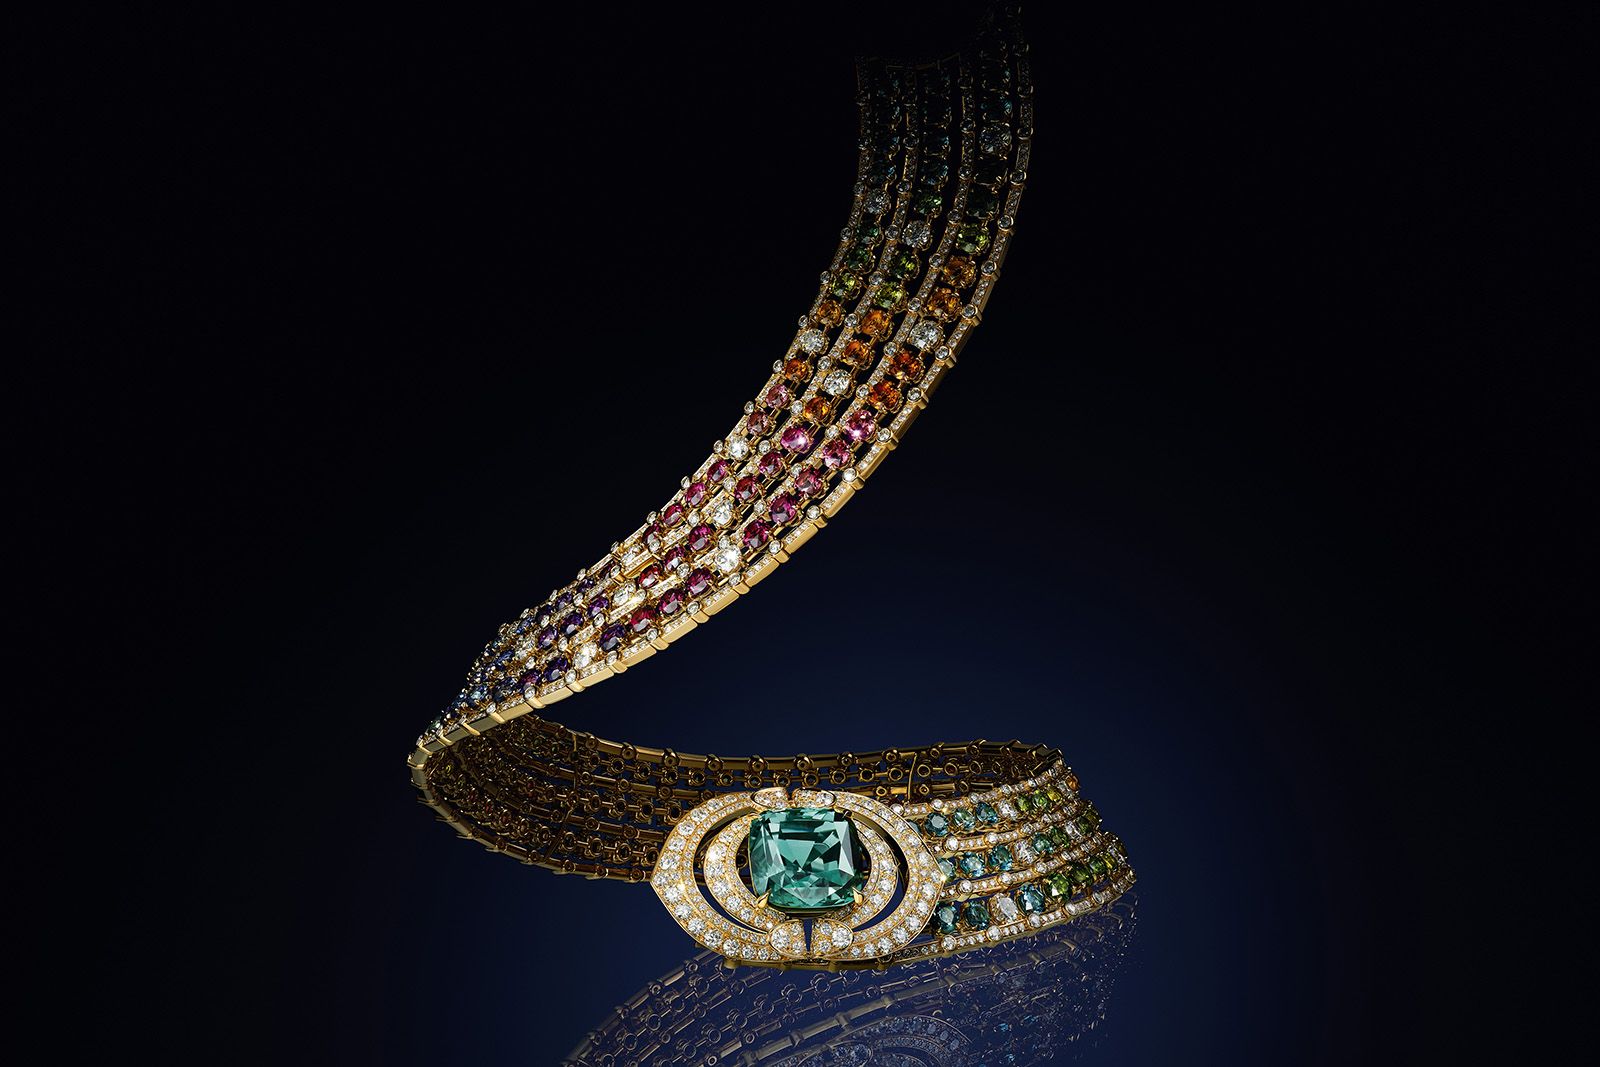 Rizzoli Book Chronicles Francesca Amfitheatrof's Louis Vuitton High Jewelry  – WWD